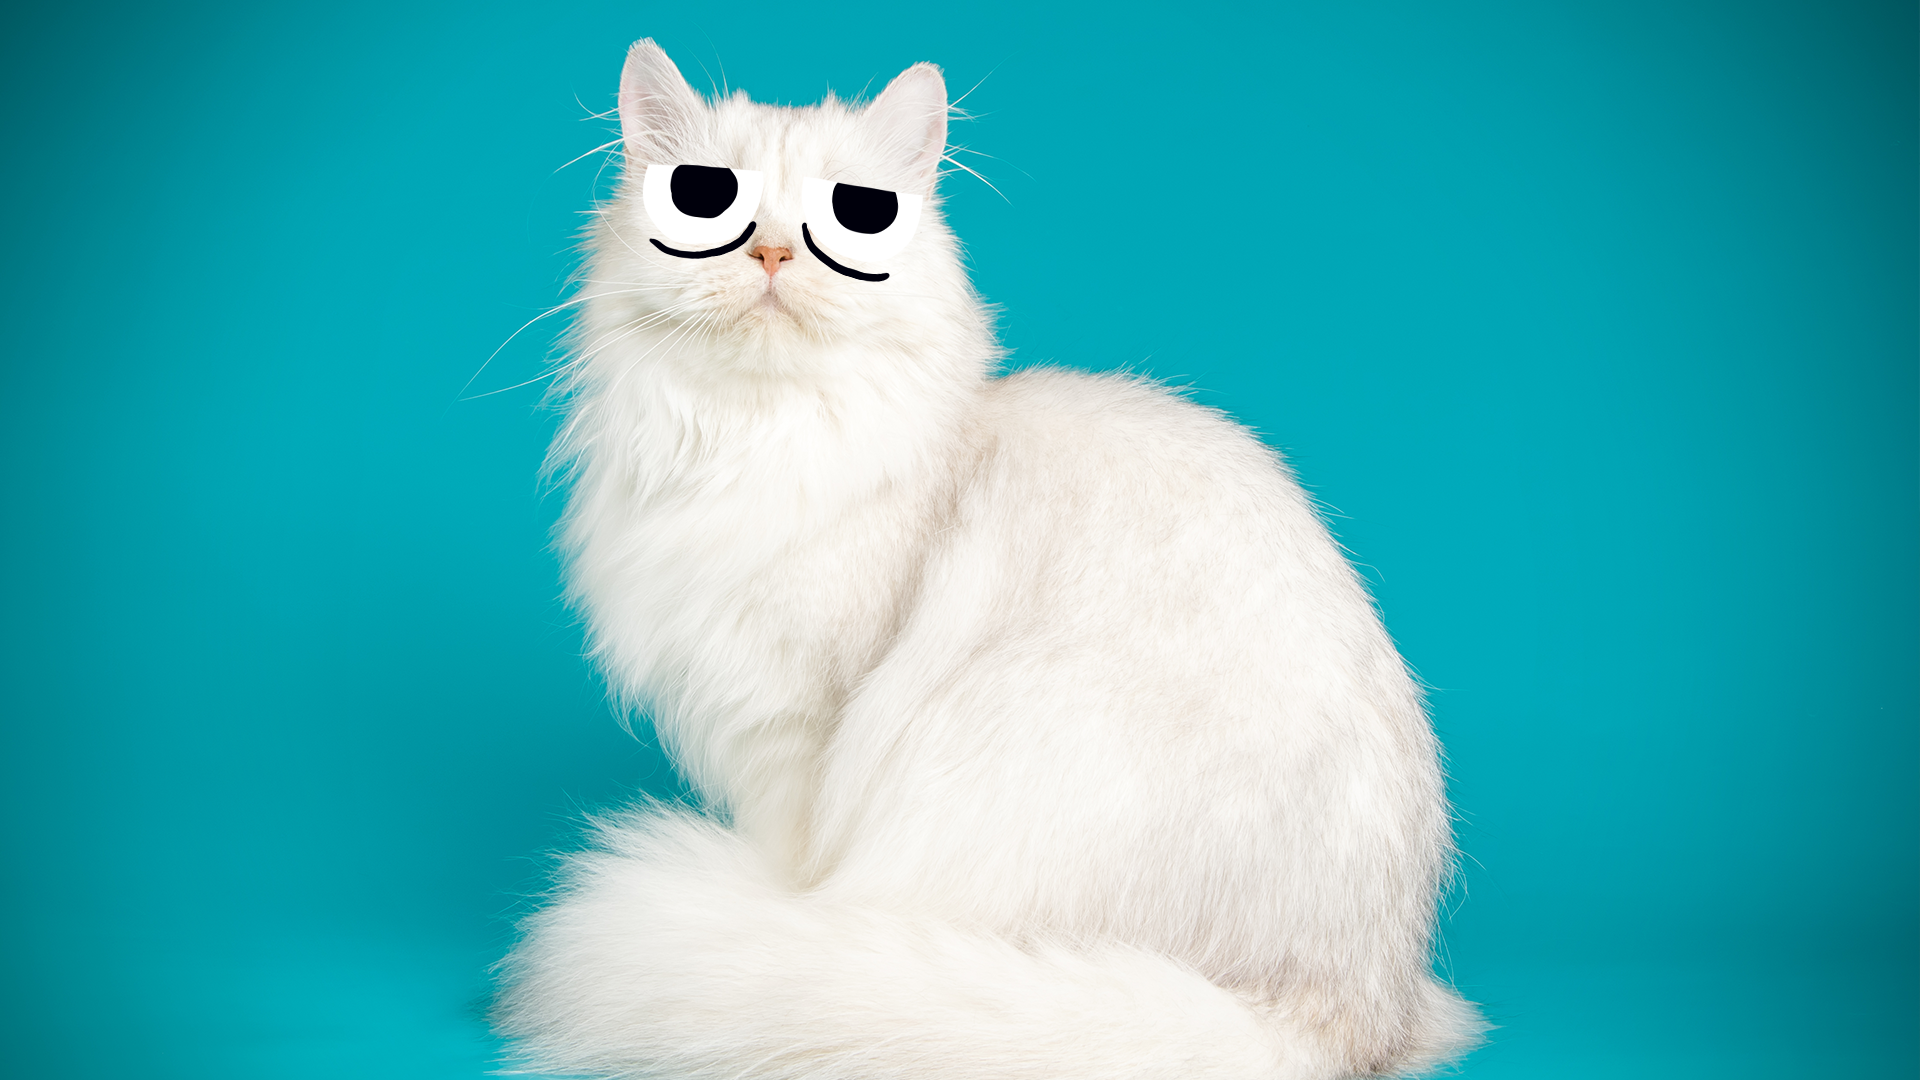 A fluffy white cat